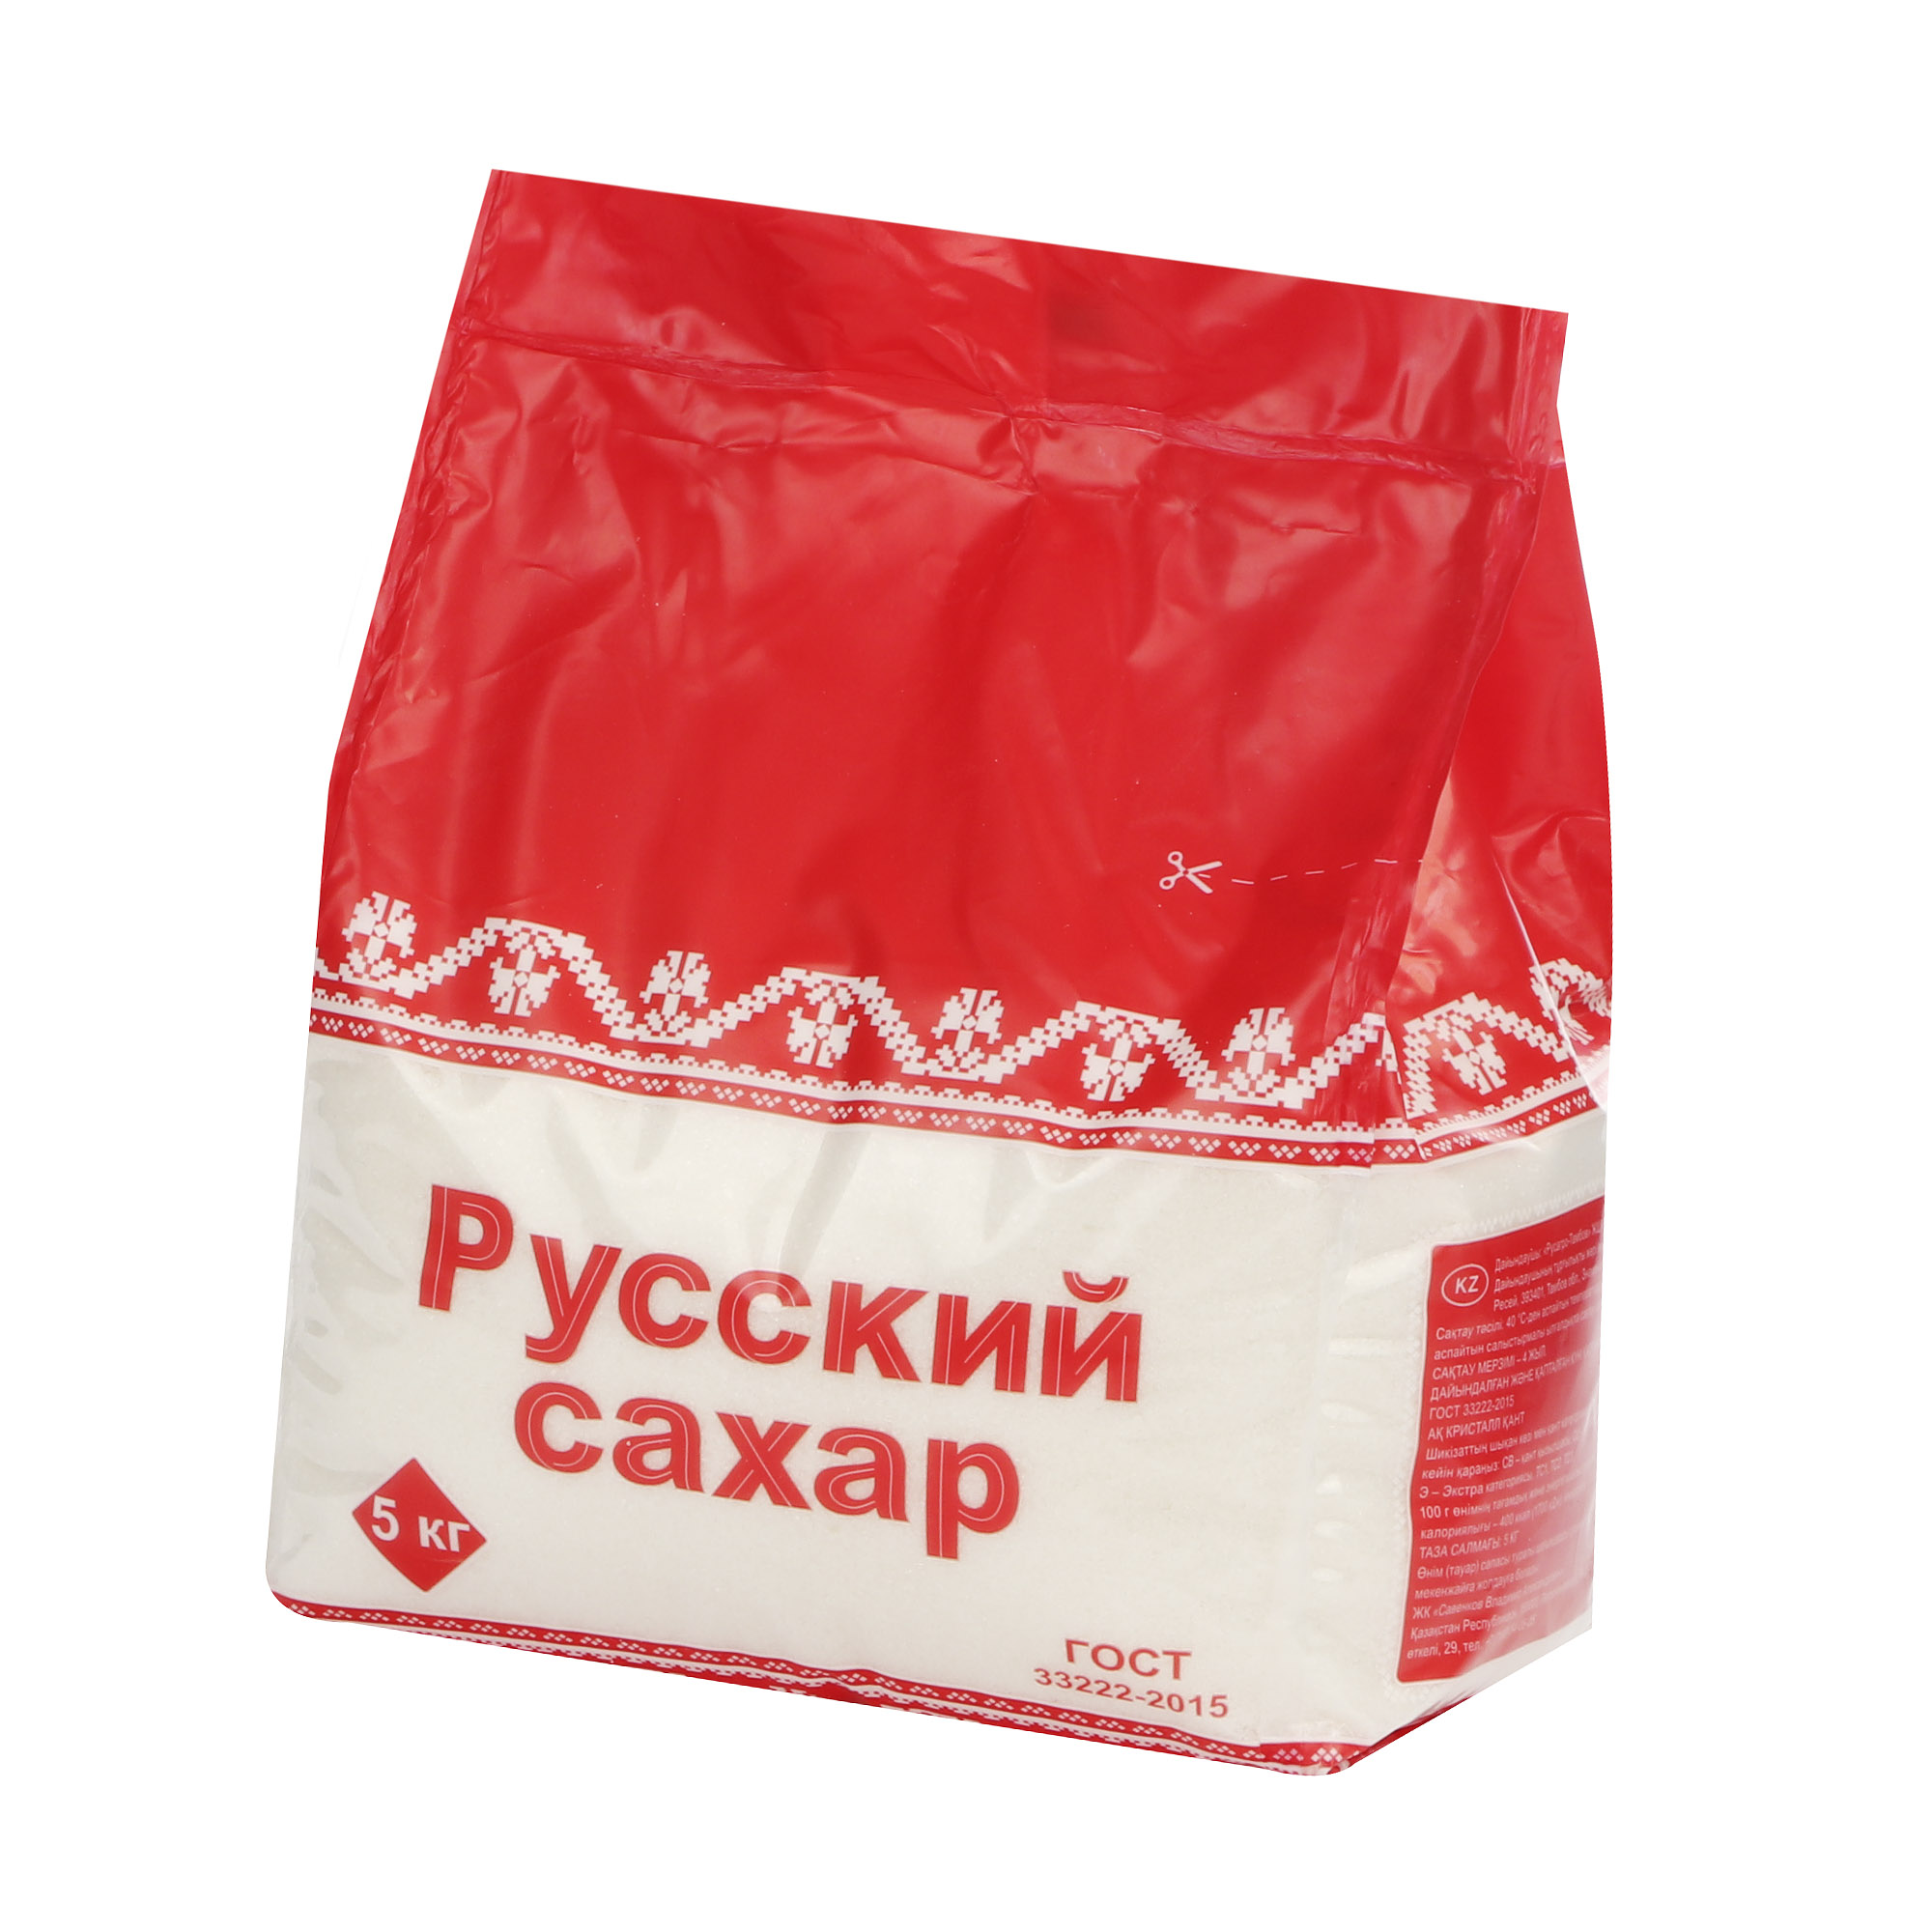 Русский сахар. Цена,  Русский сахар , Санкт-Петербурге .